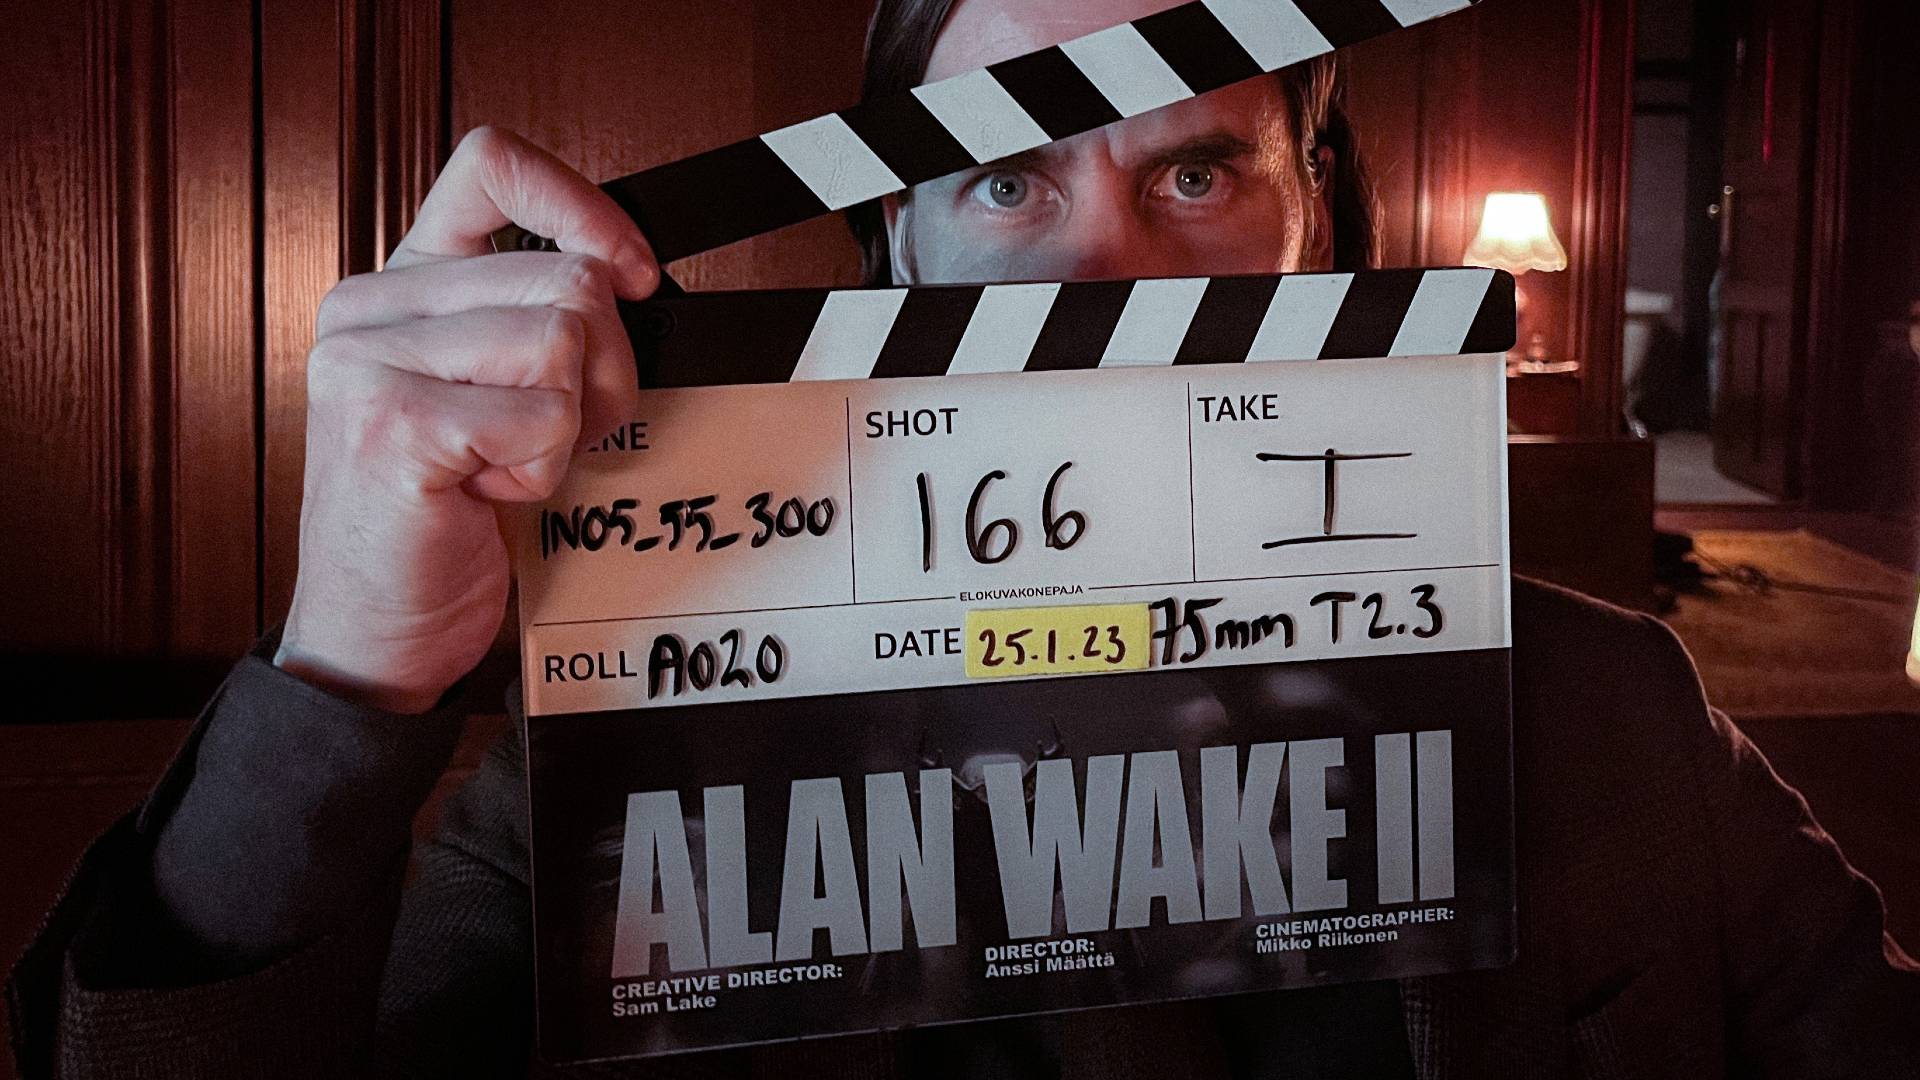 Alan Wake 2 - Previously On Alan Wake